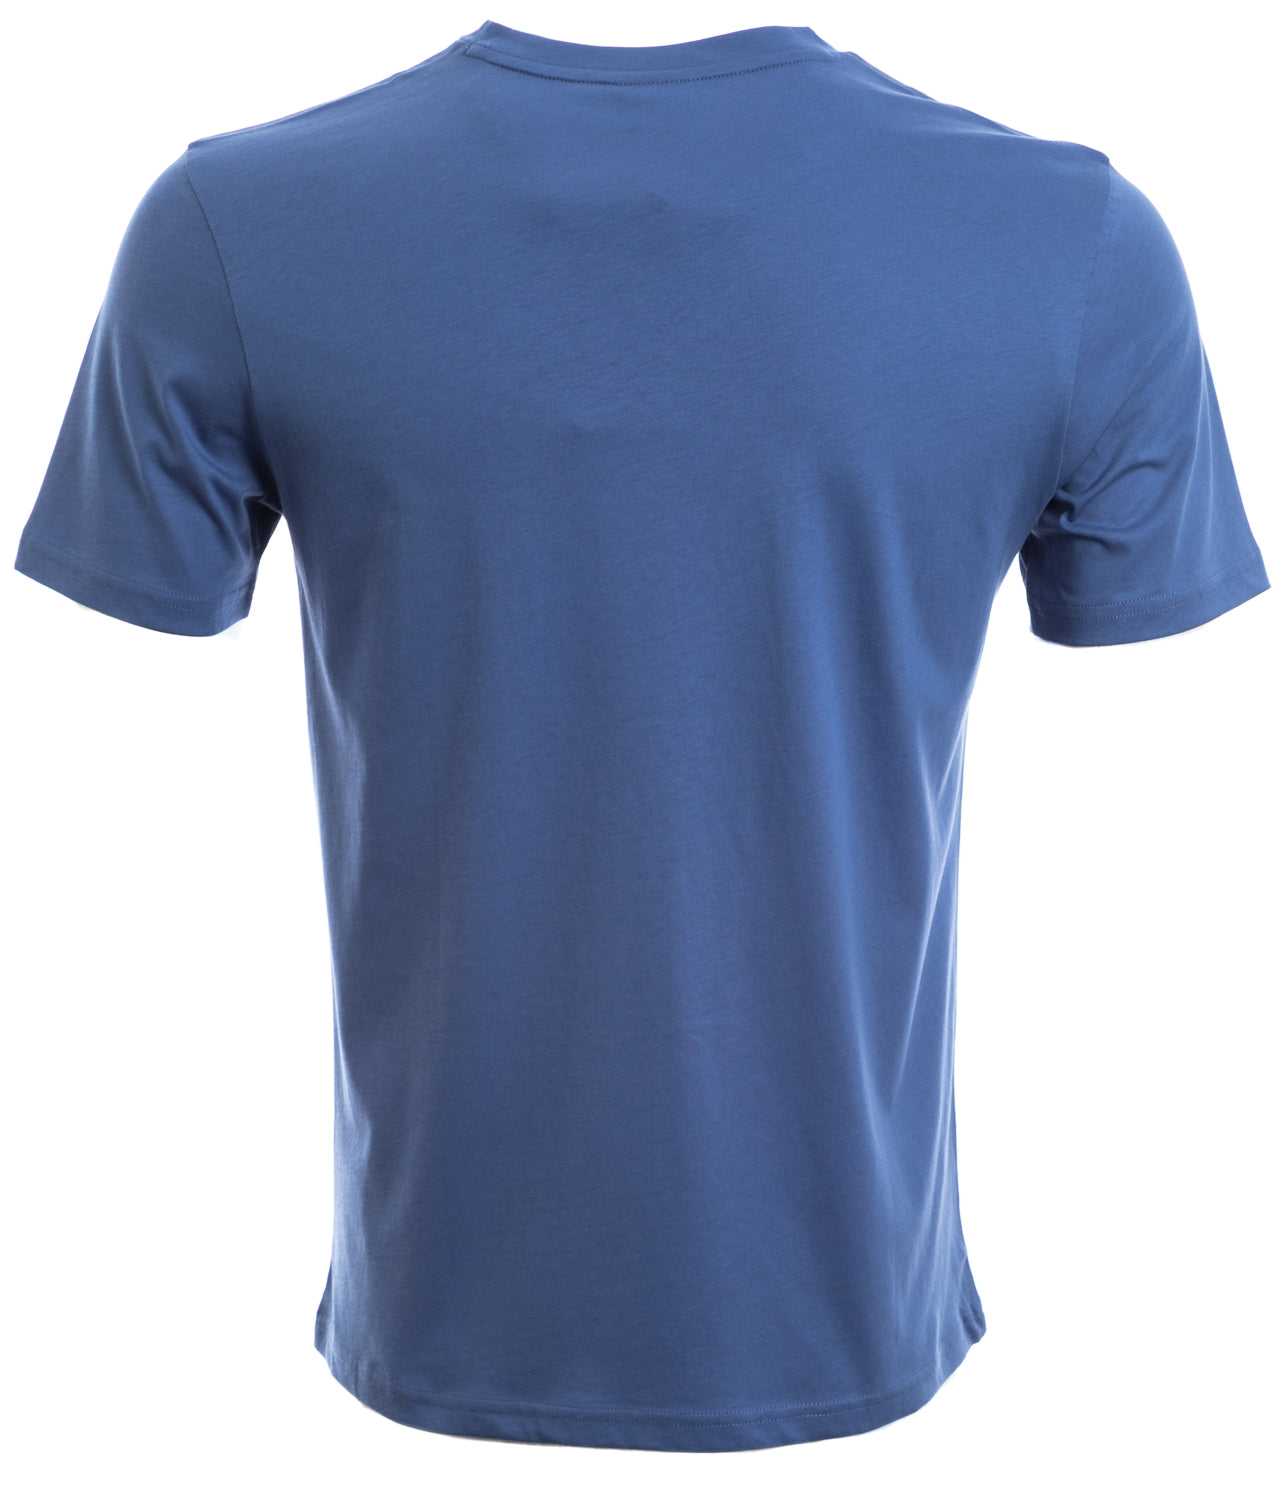 BOSS TNoah4 T-Shirt in Airforce Blue